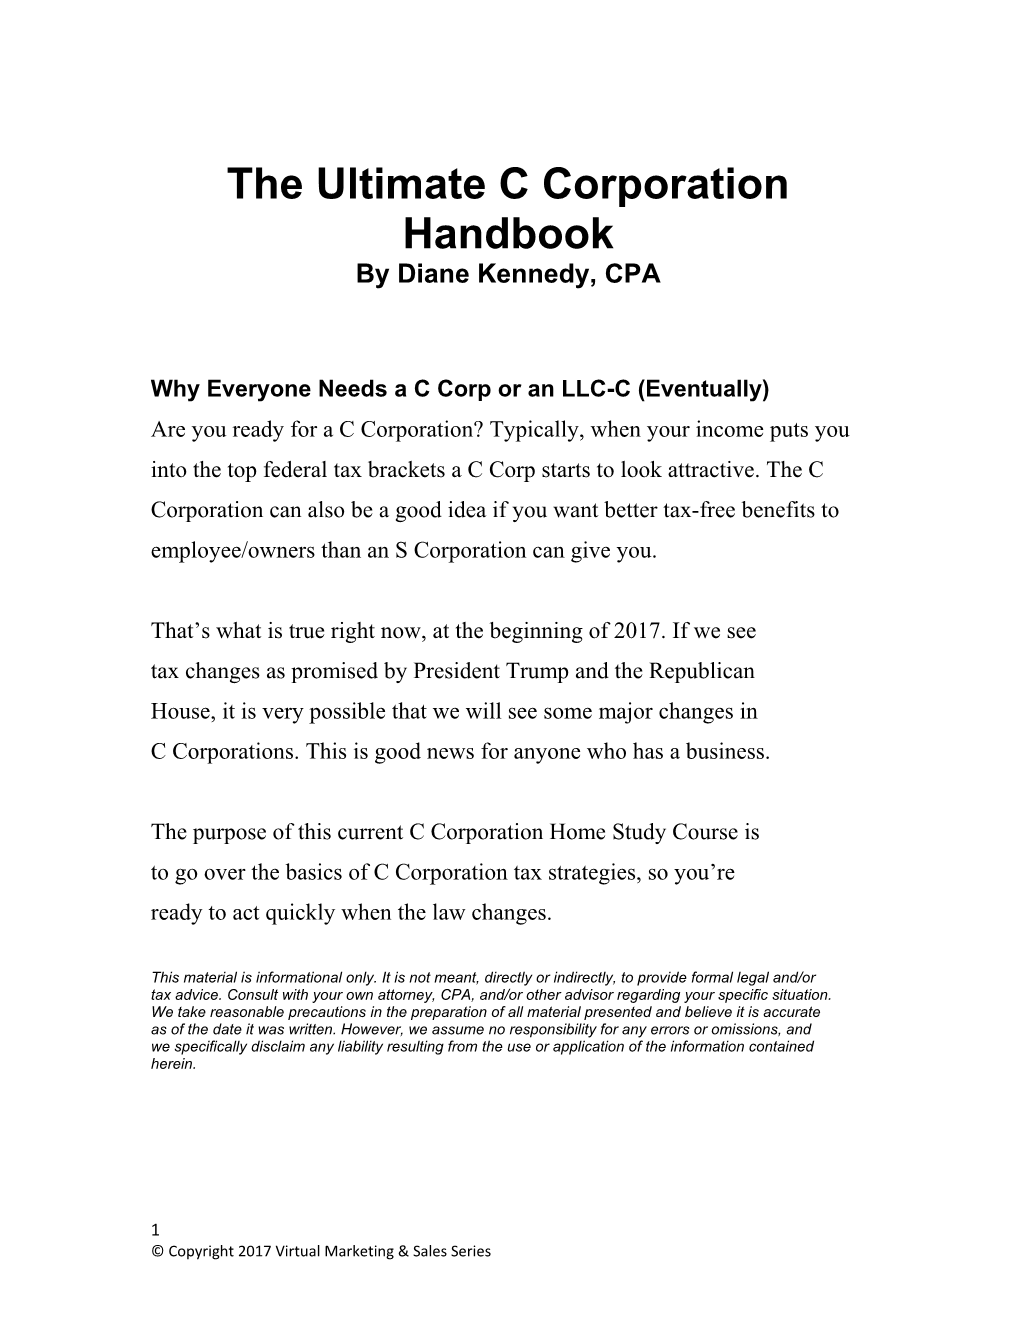 The Ultimate C Corporation Handbook